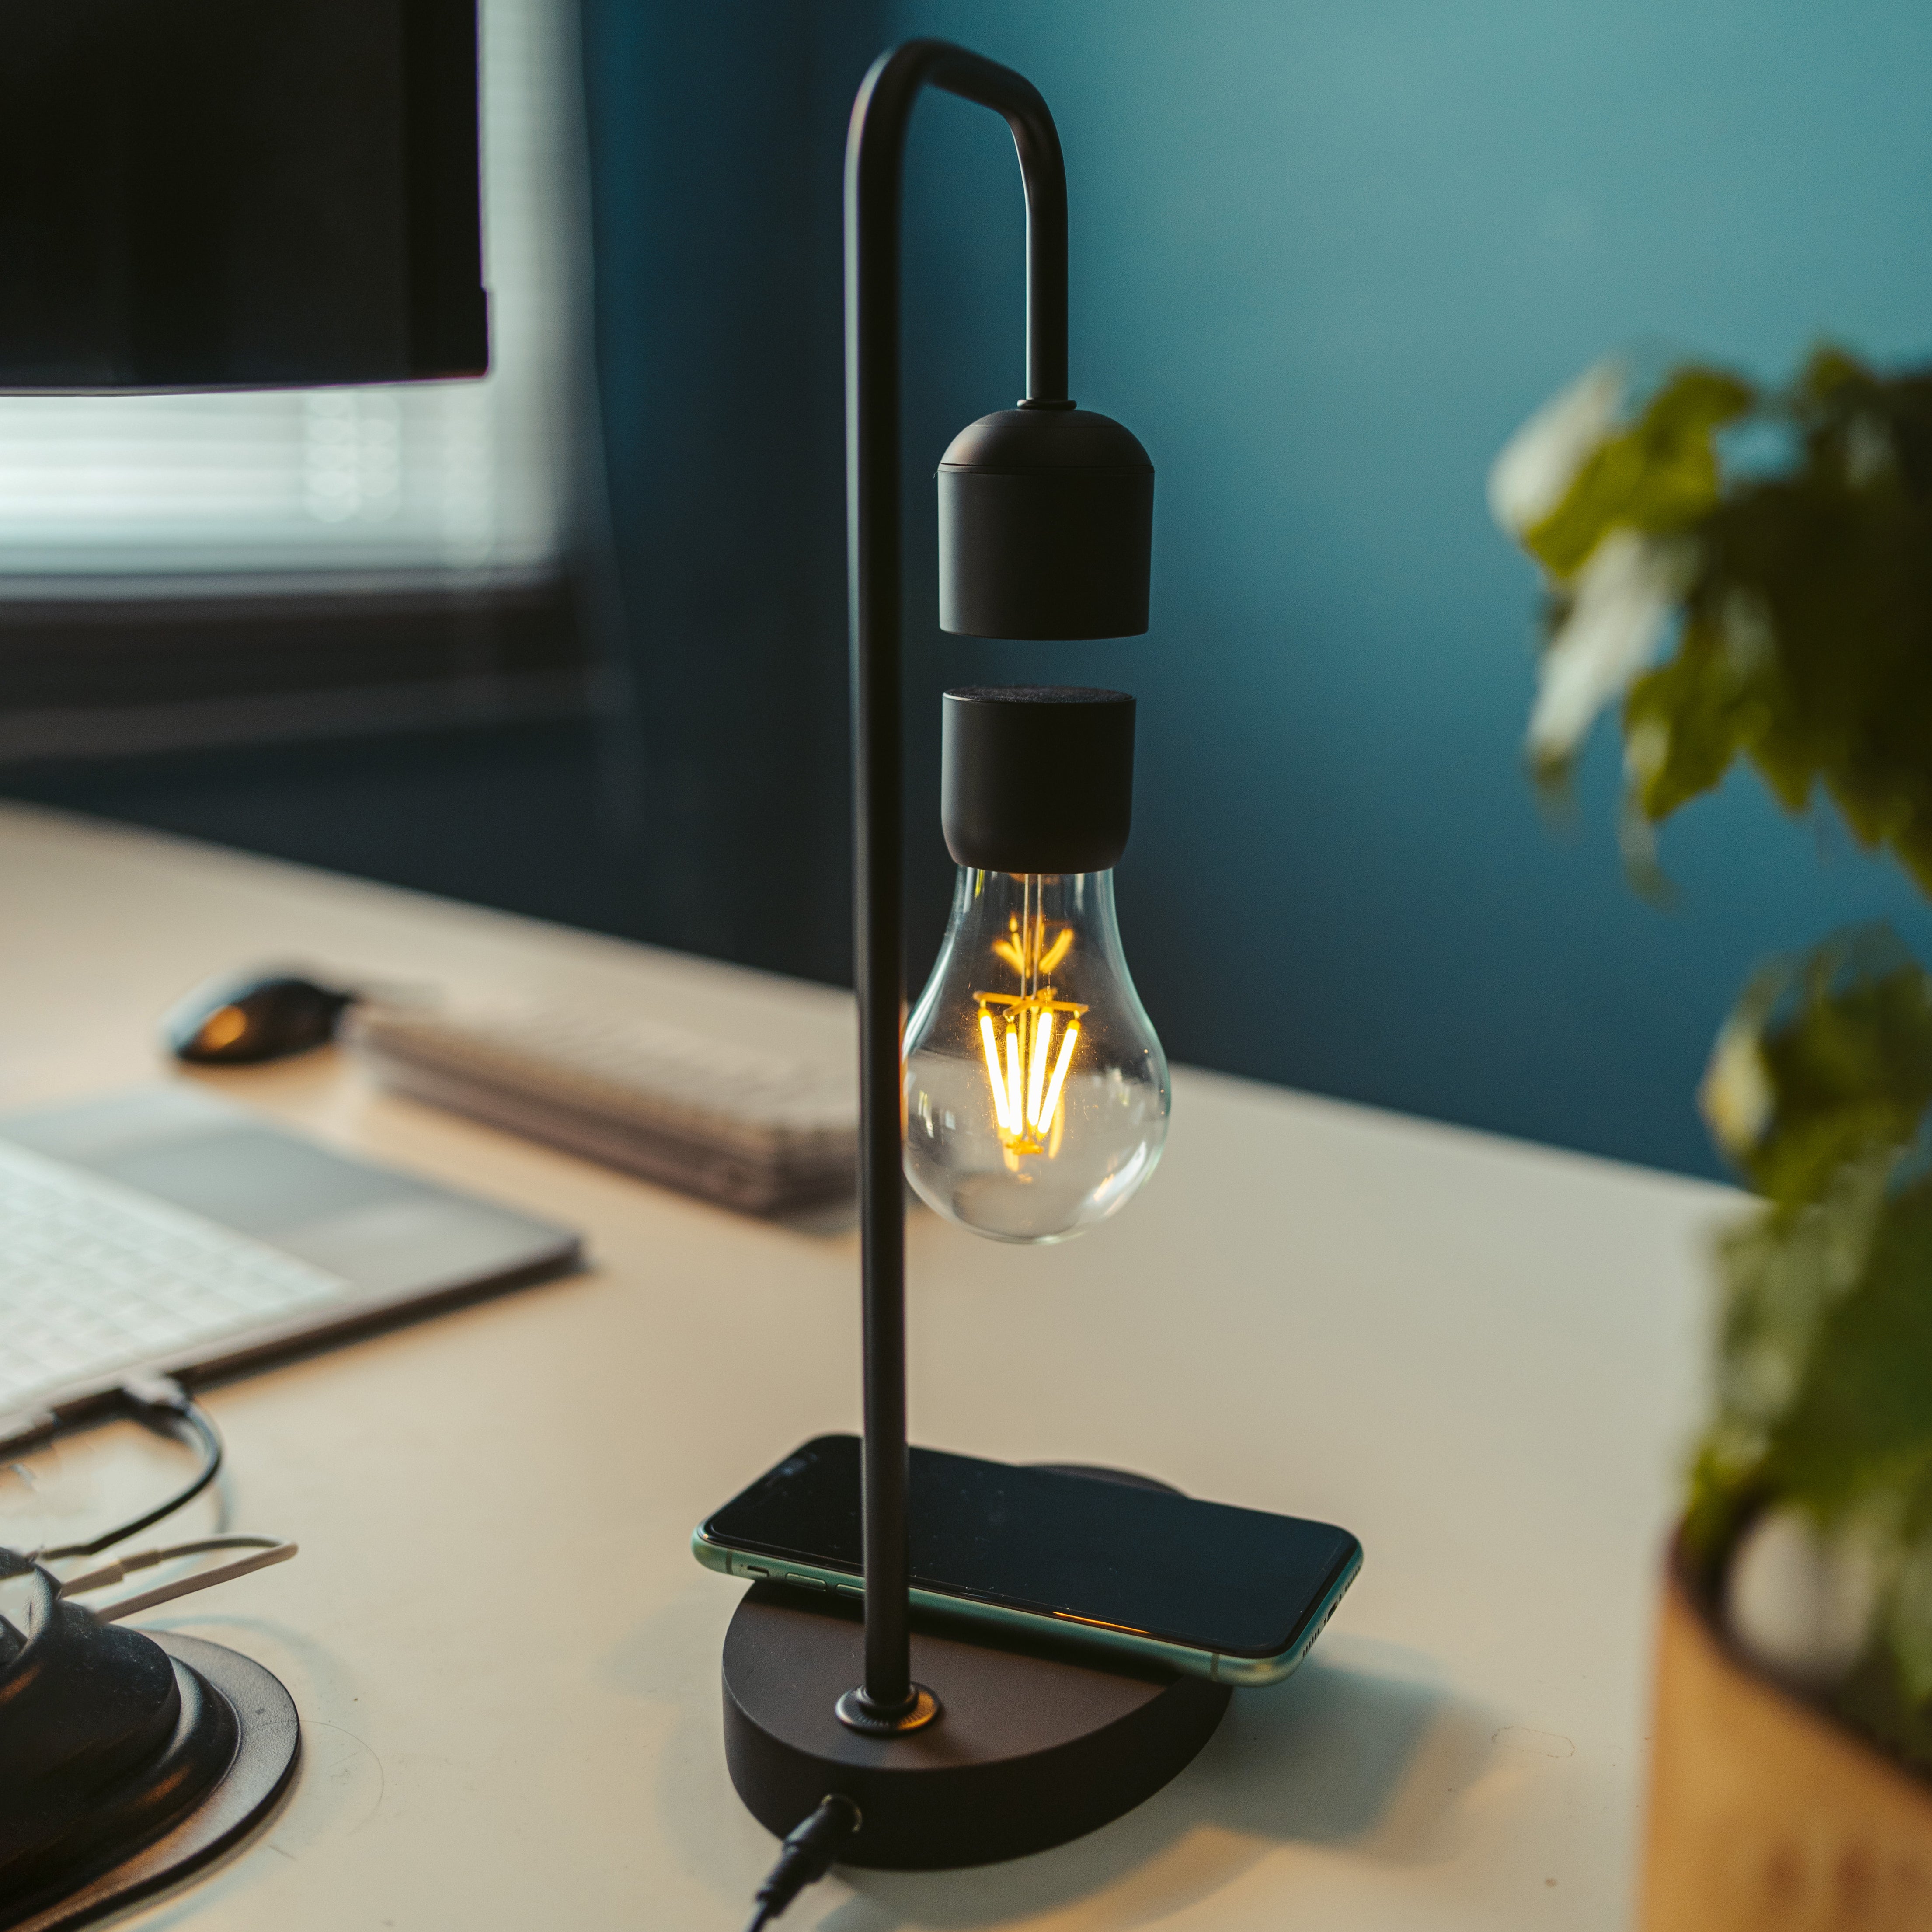 Levitating Desk Lamp - The Art of Creativity